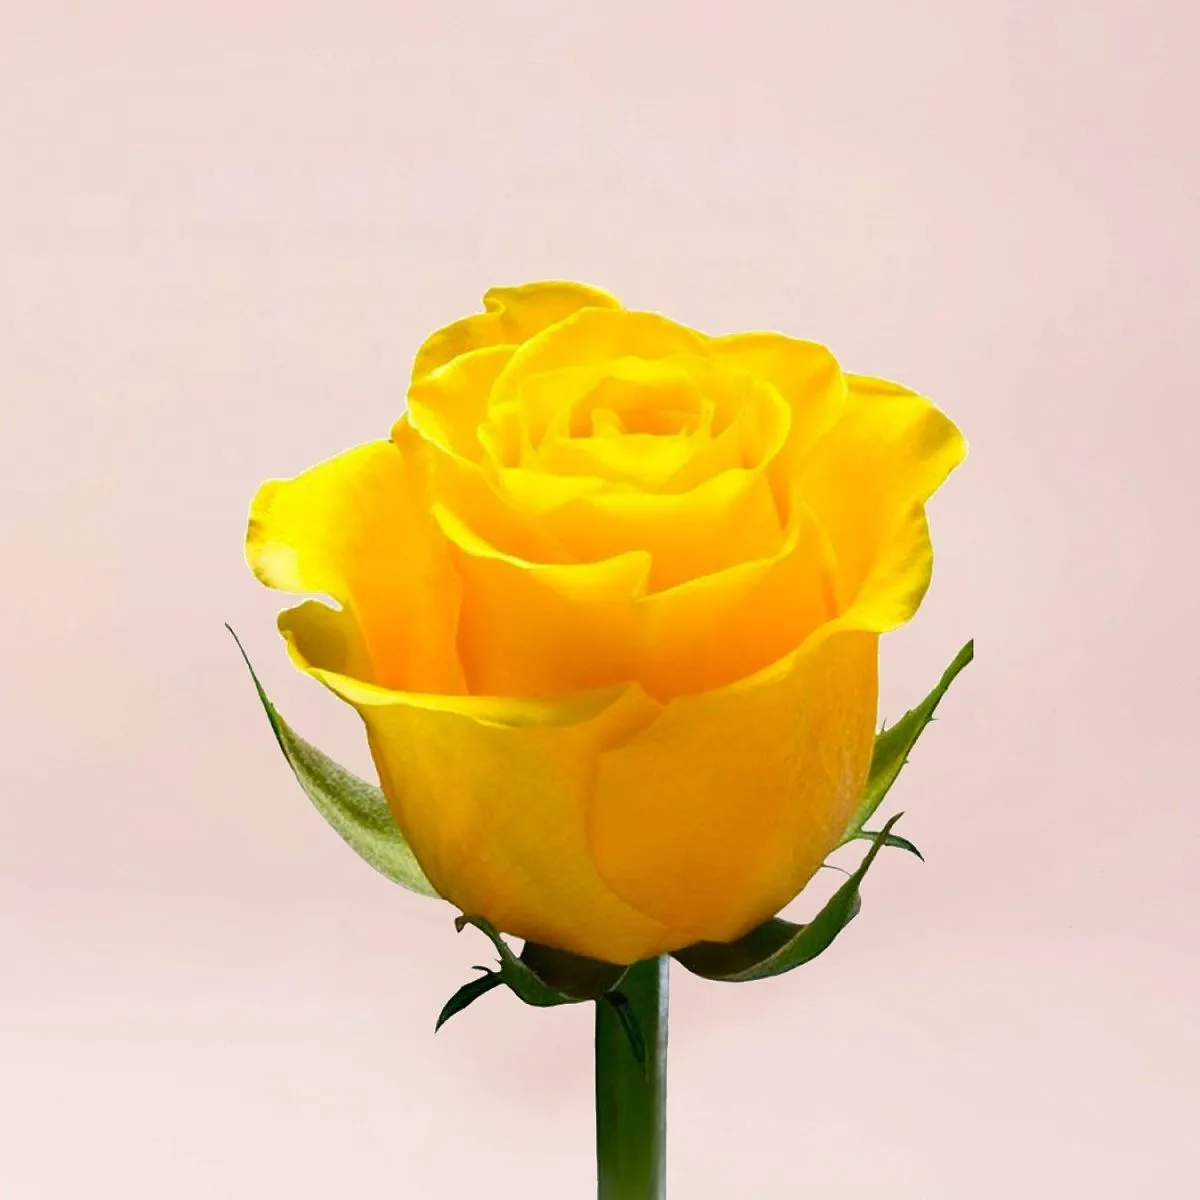 19 желтых роз (60 см)